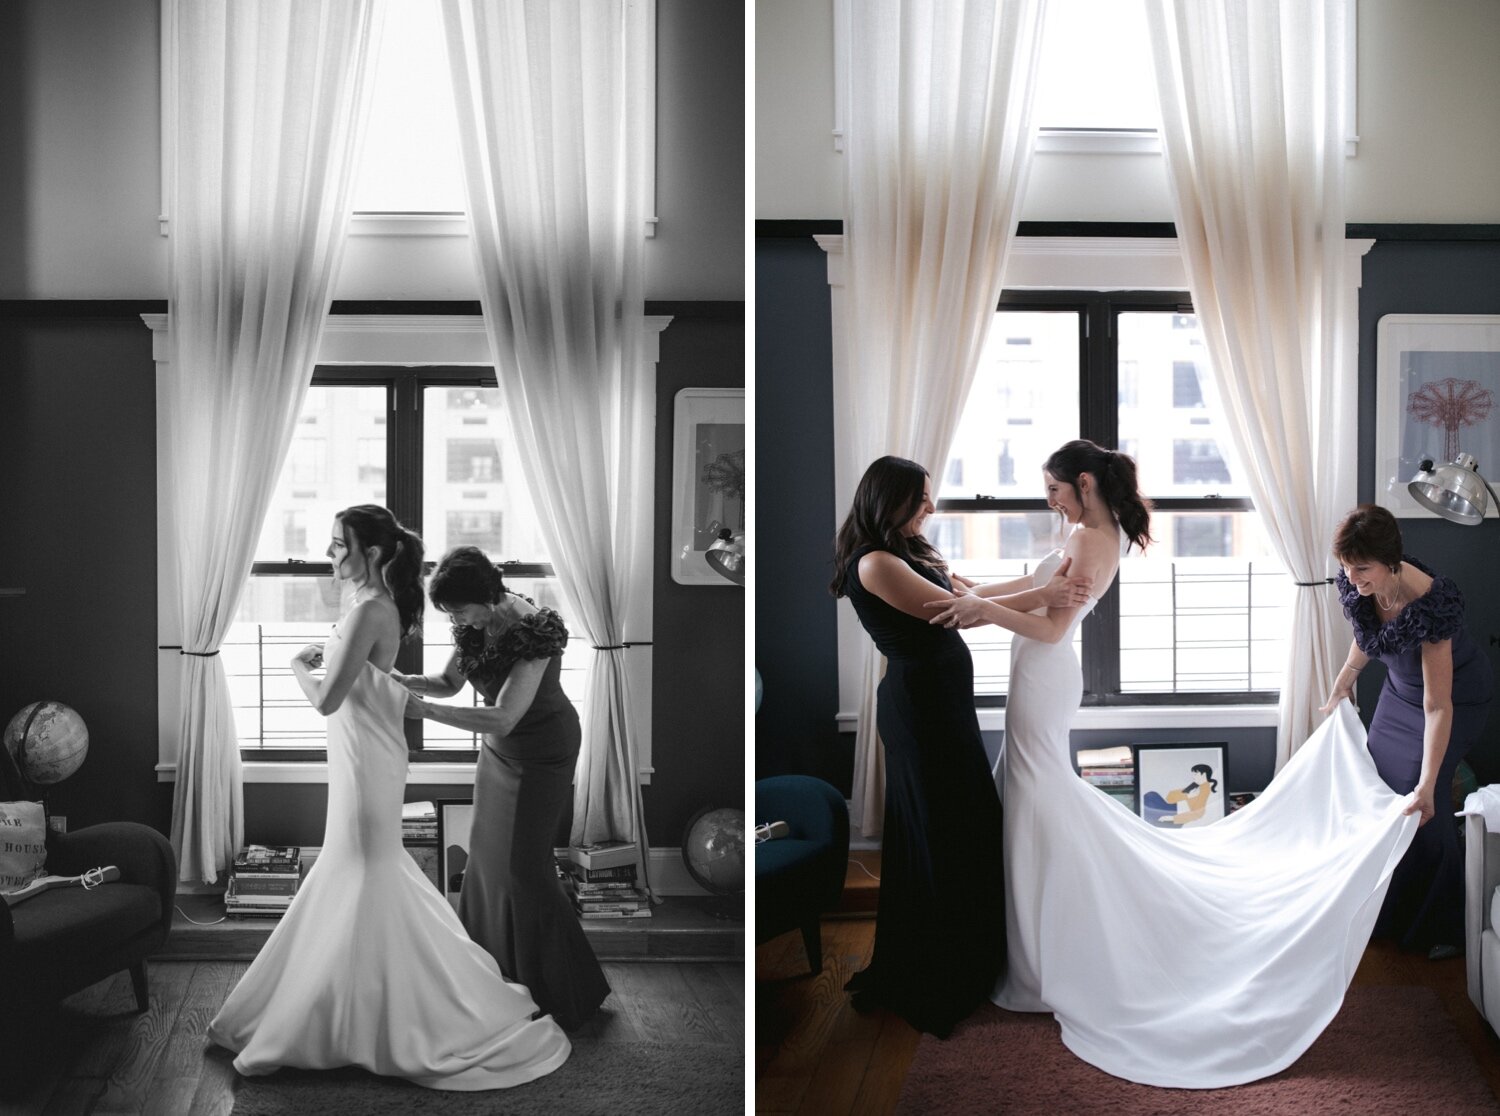 Brooklyn New York Wedding Photographer, Box House Hotel Wedding Photographer, Top of the Box Wedding Photographer, Brooklyn Rooftop Wedding Photographer, New York Rooftop Wedding Photographer